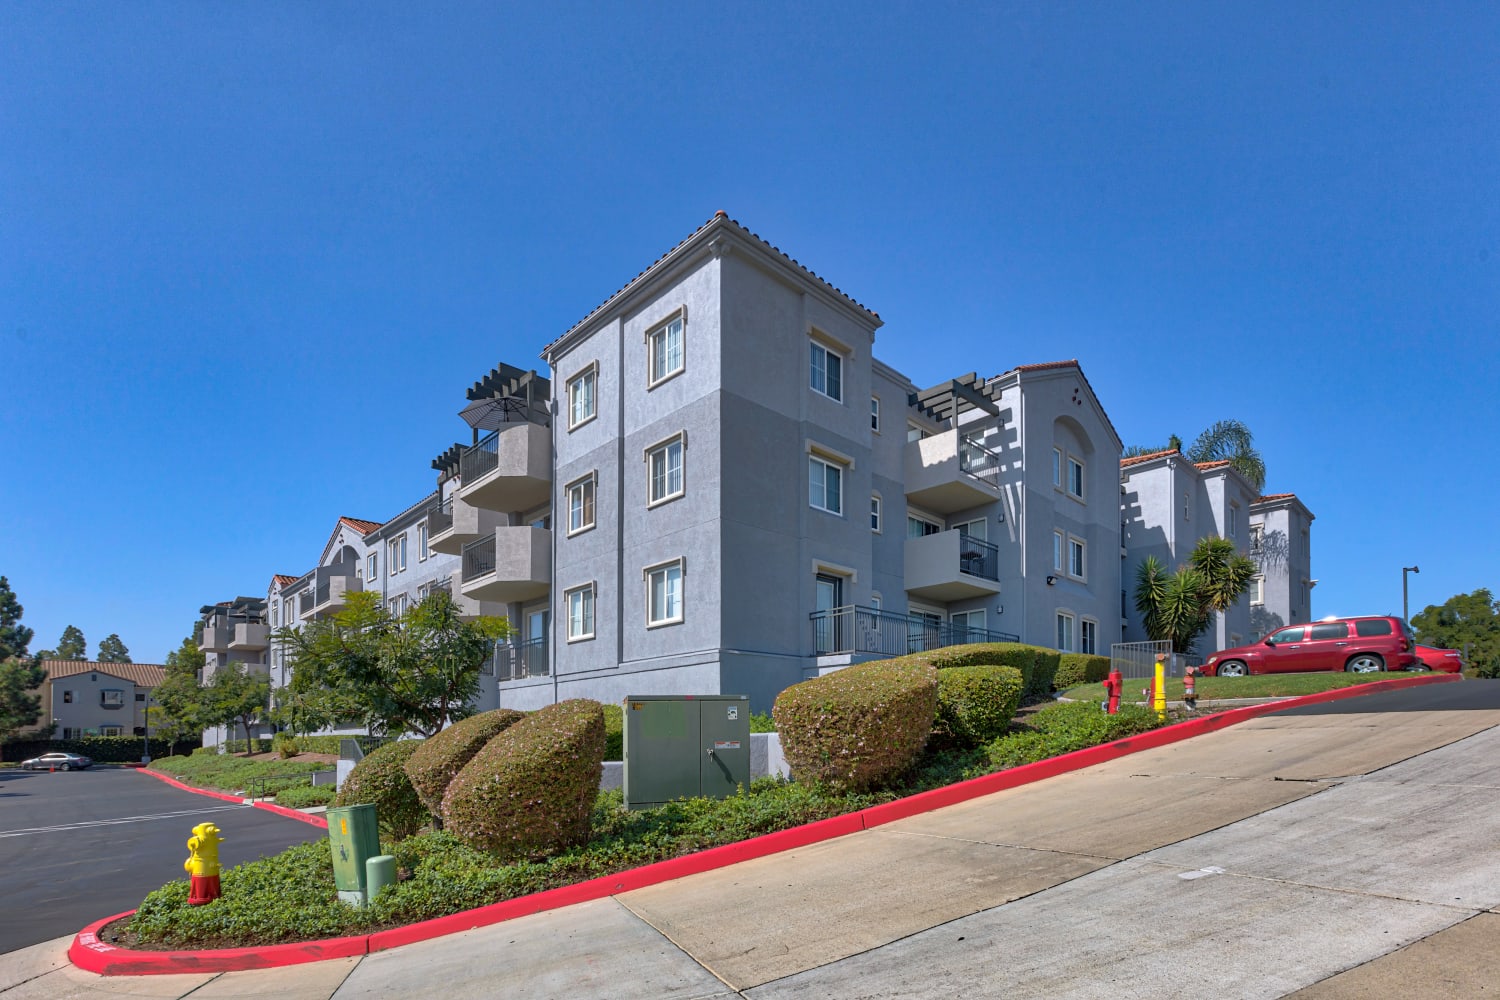 Grandon Village apartments in San Marcos, California